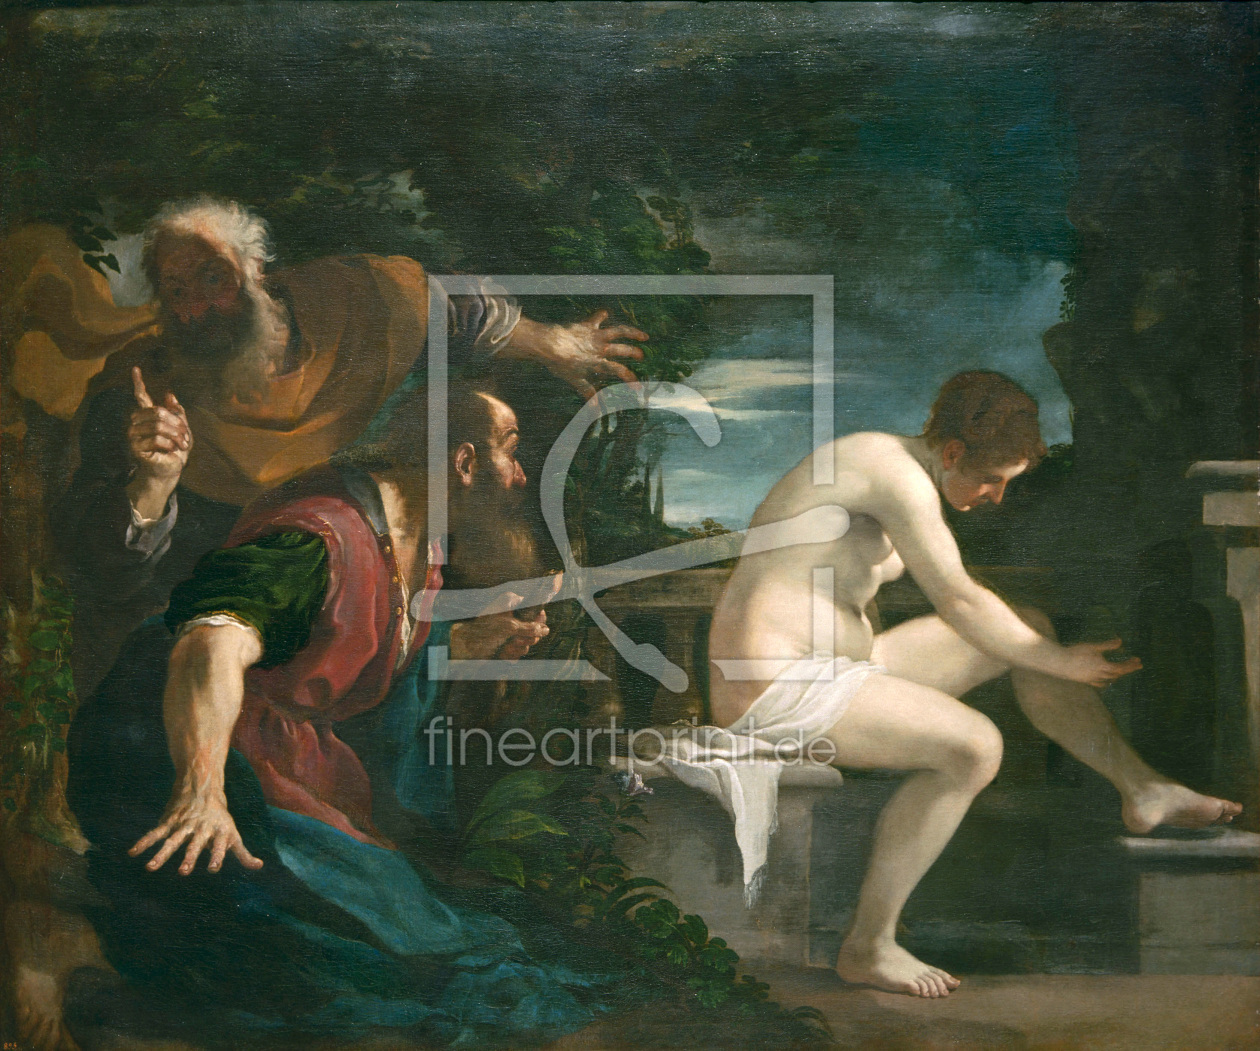 Bild-Nr.: 30009269 Guercino / Susannah and the Elders erstellt von Guercino, Giovanni Francesco Barbieri